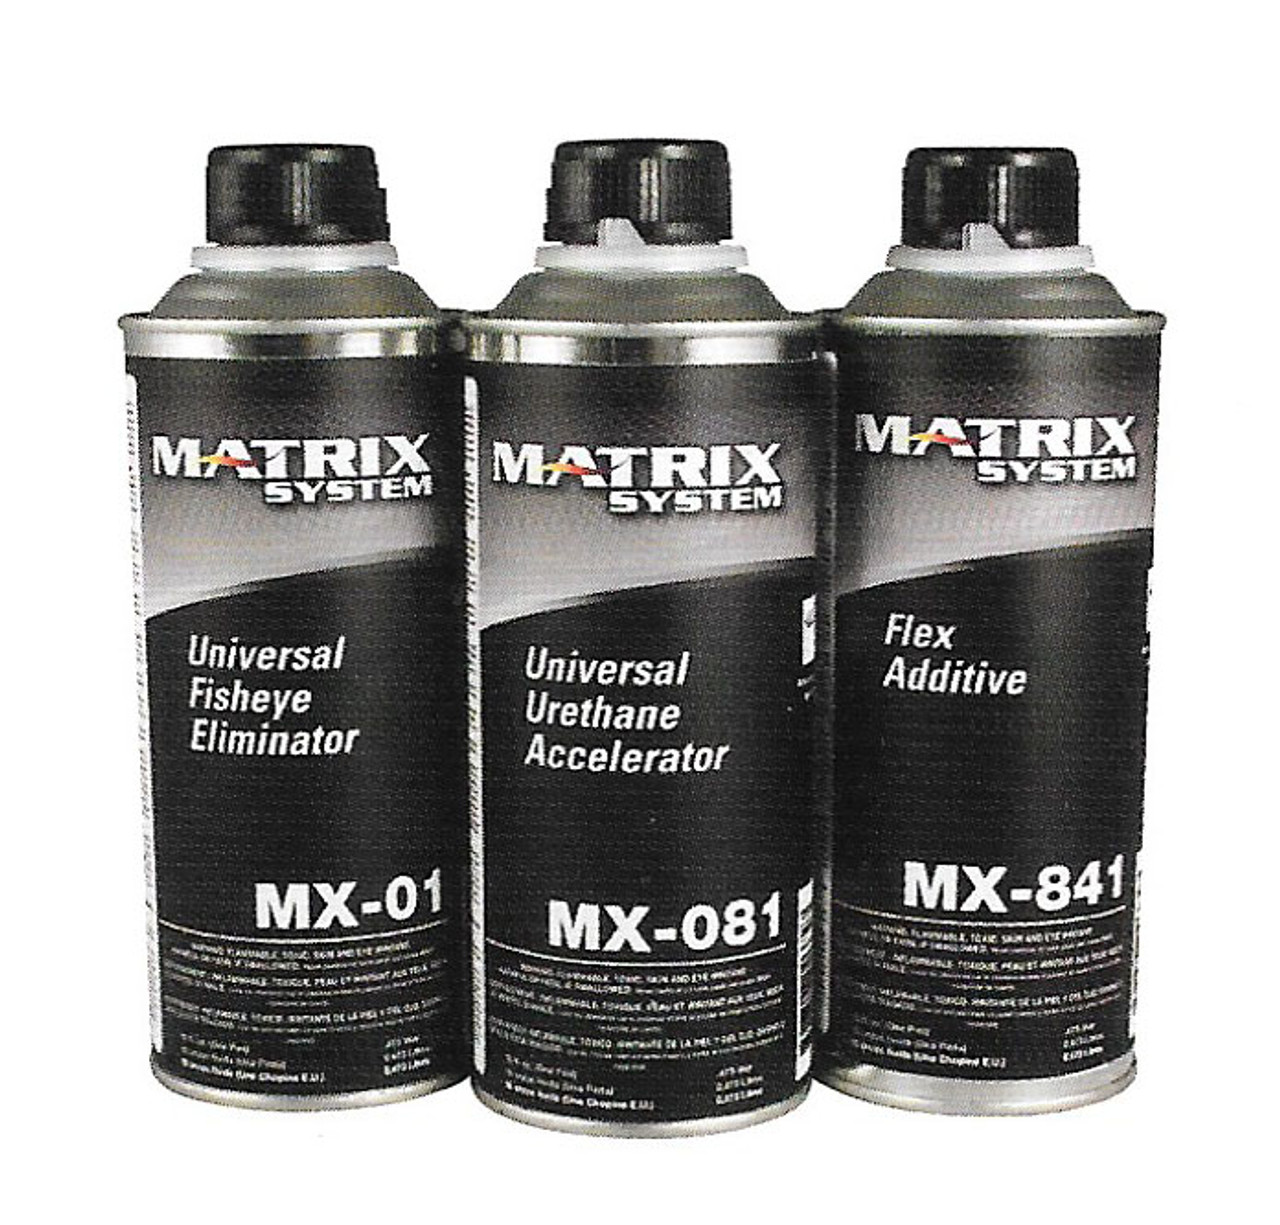 Matrix MX-841 Flex Additive Pint